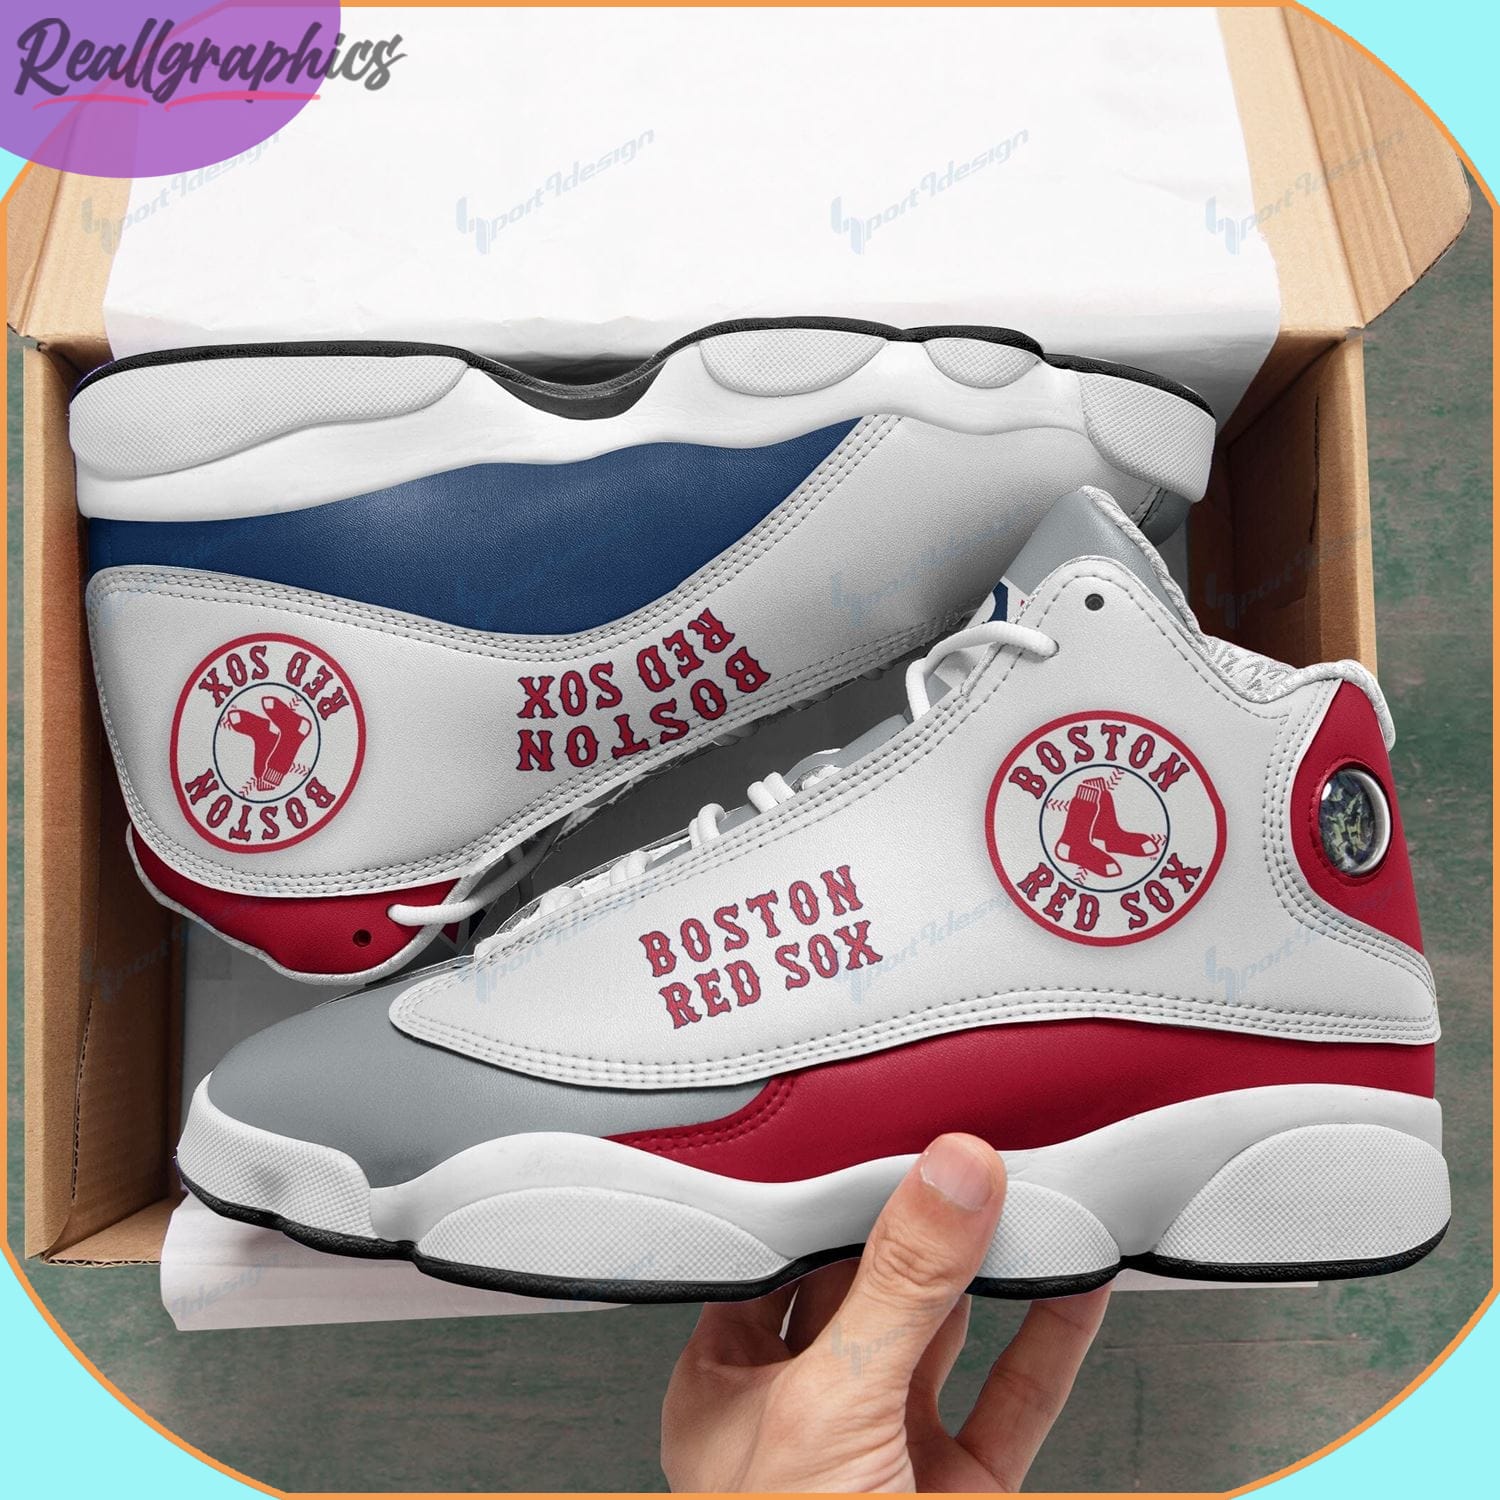 Boston Red Sox Air Jordan 13 Sneaker, Red Sox MLB Custom Shoes